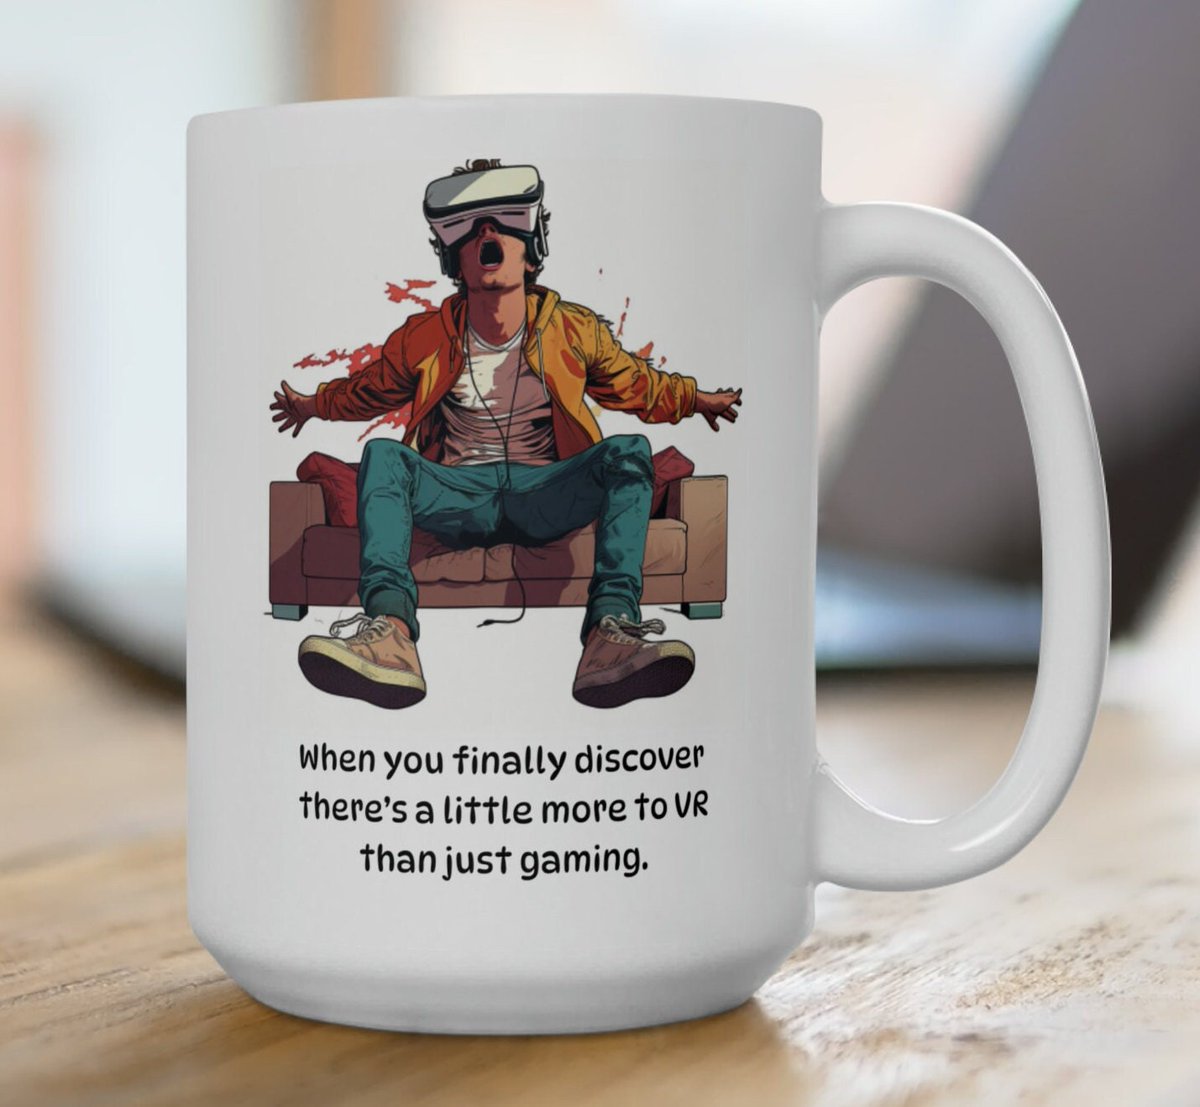 thedavecollection.etsy.com/listing/165156…
#mug #mugs #Coffee #CoffeeTime #coffeetable #CoffeeLover #funnymugs #vr #gamer #gamergirl